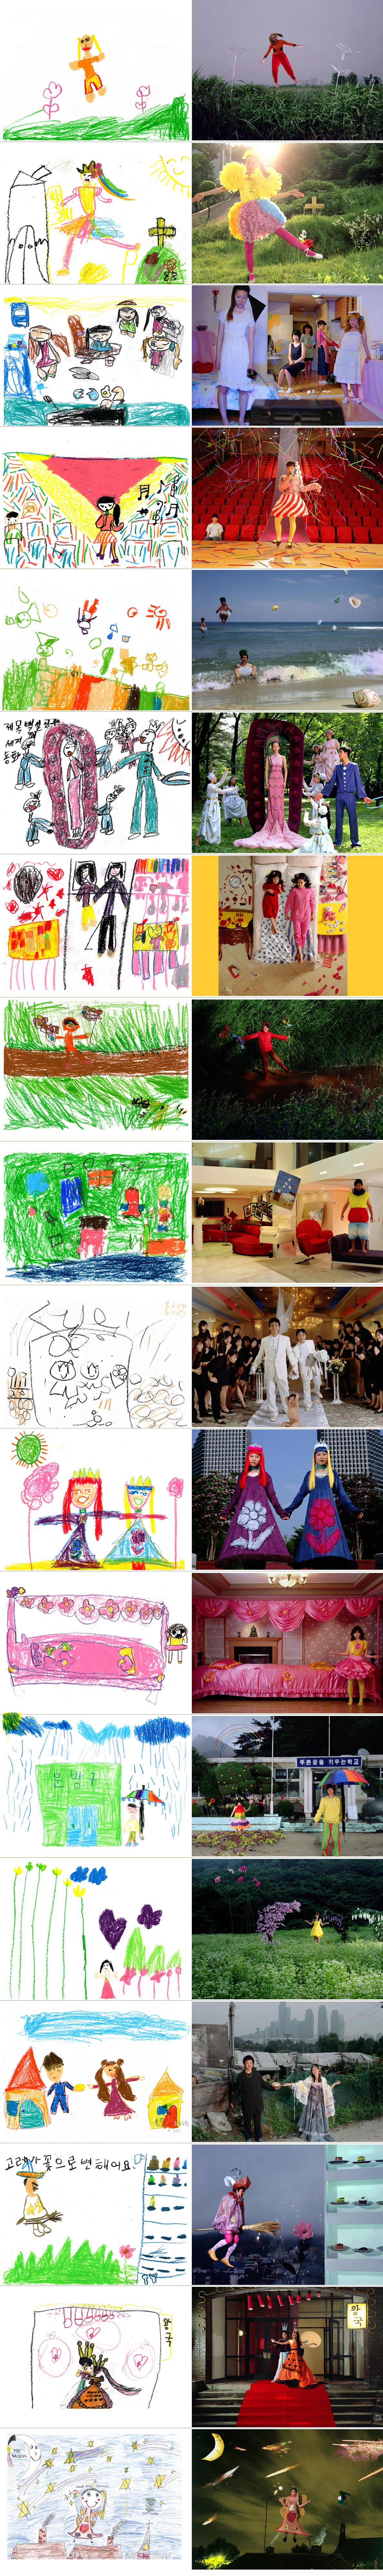 http://www.planetdan.net/pics/misc/kids_drawings_as_photos.jpg